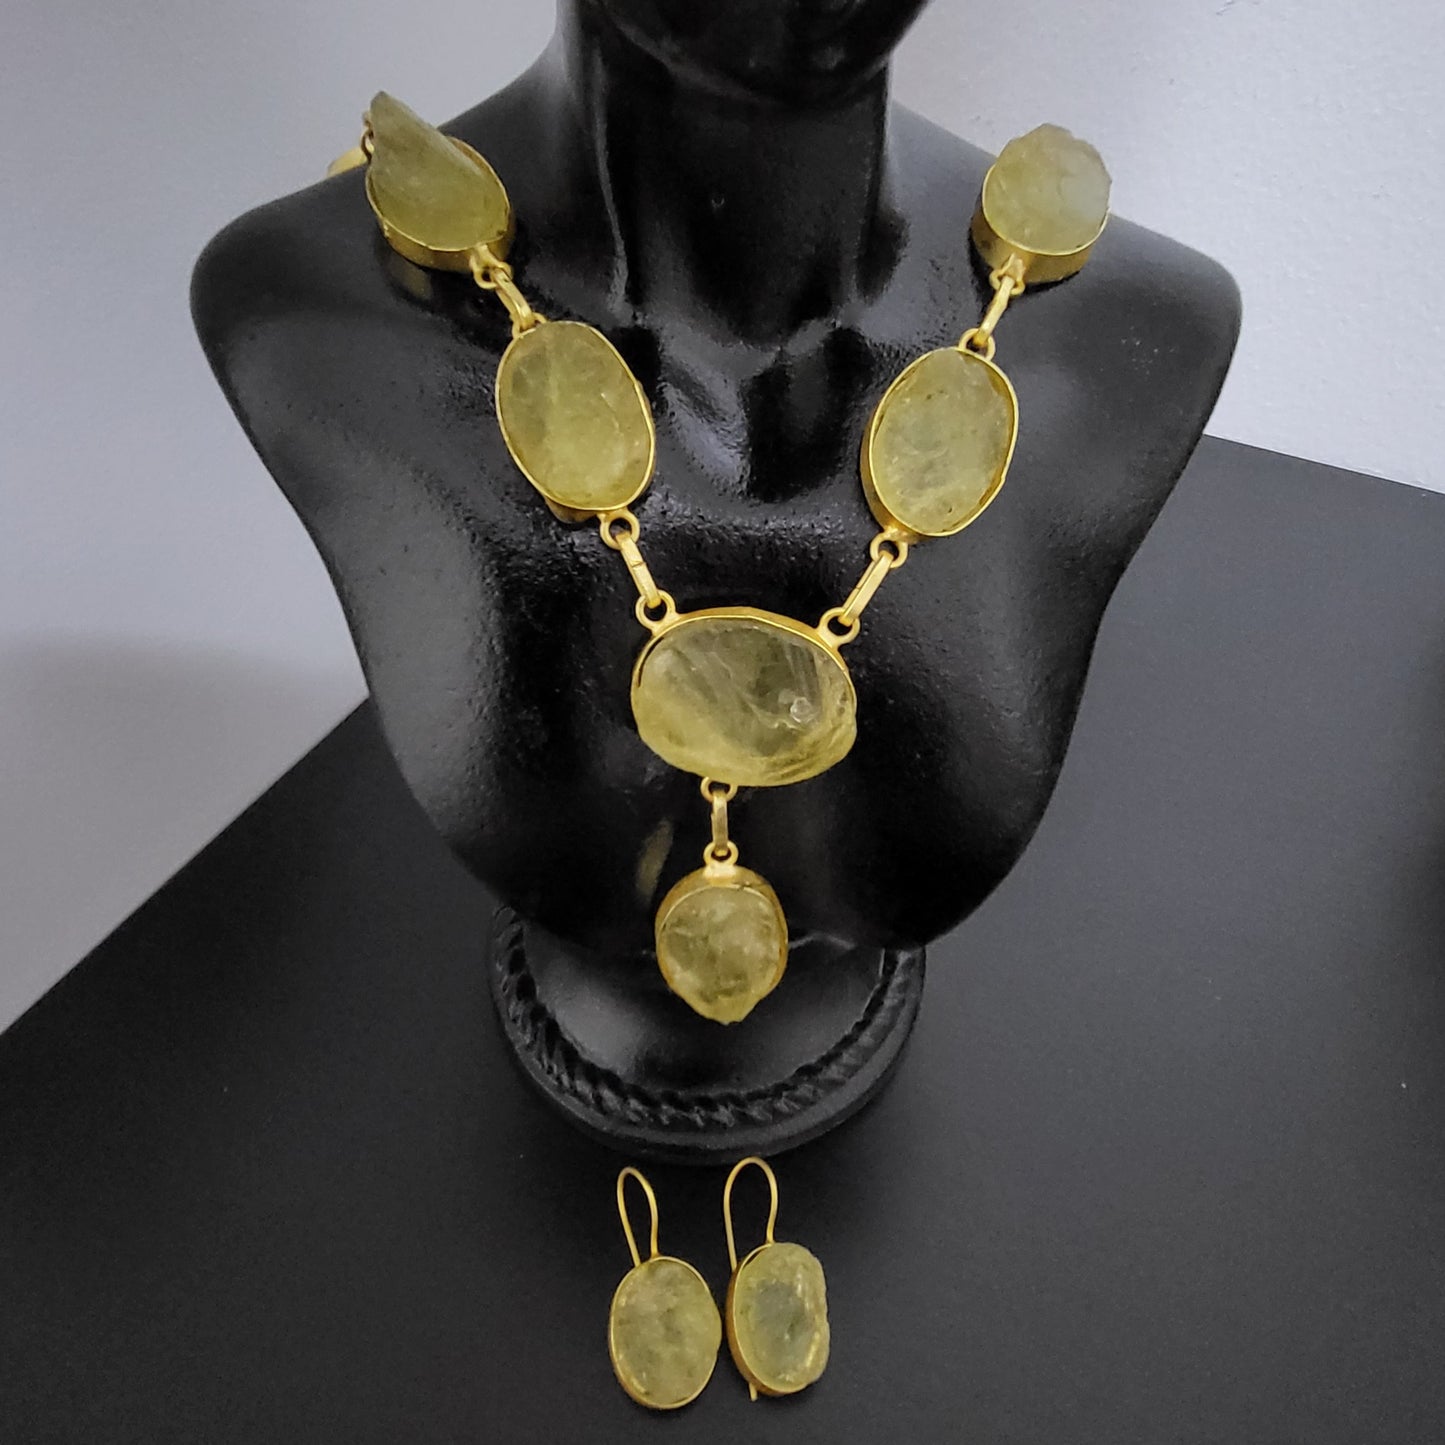 The Lemon Stone Necklace set